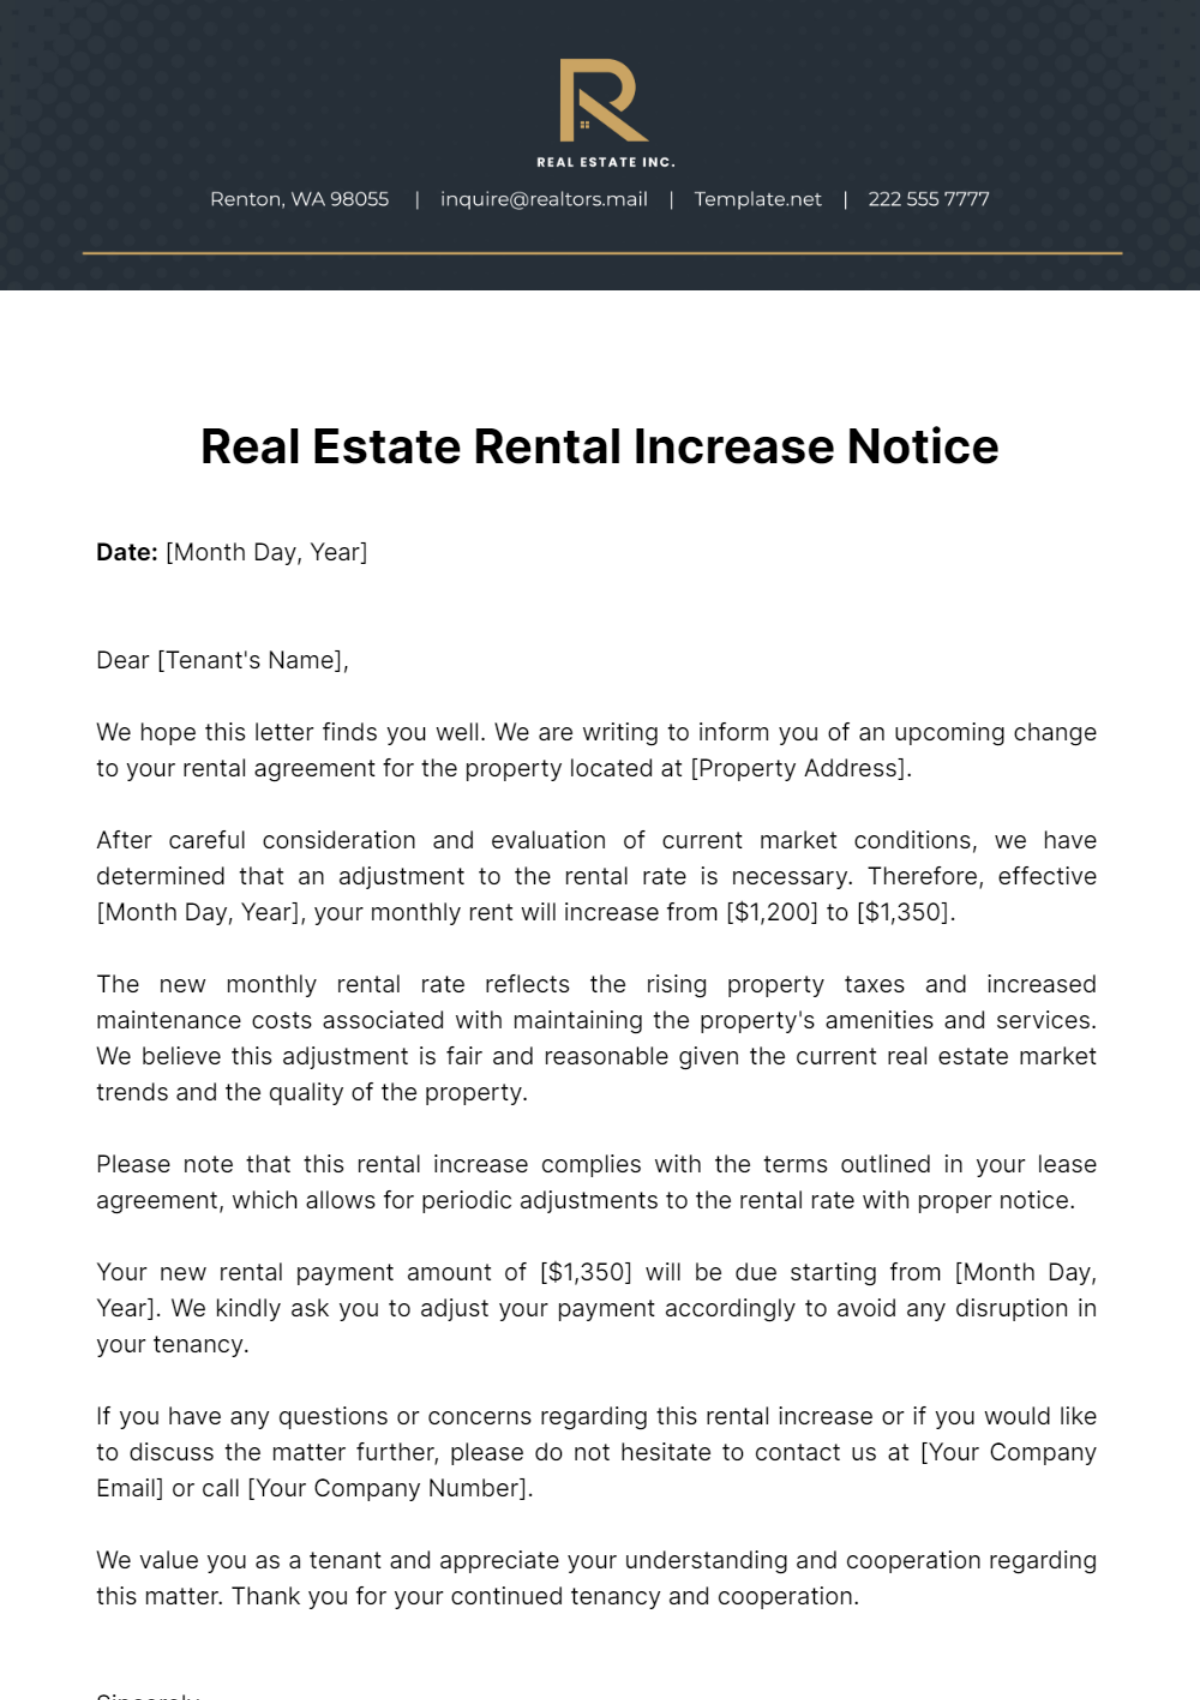 Free Real Estate Rental Increase Notice Template